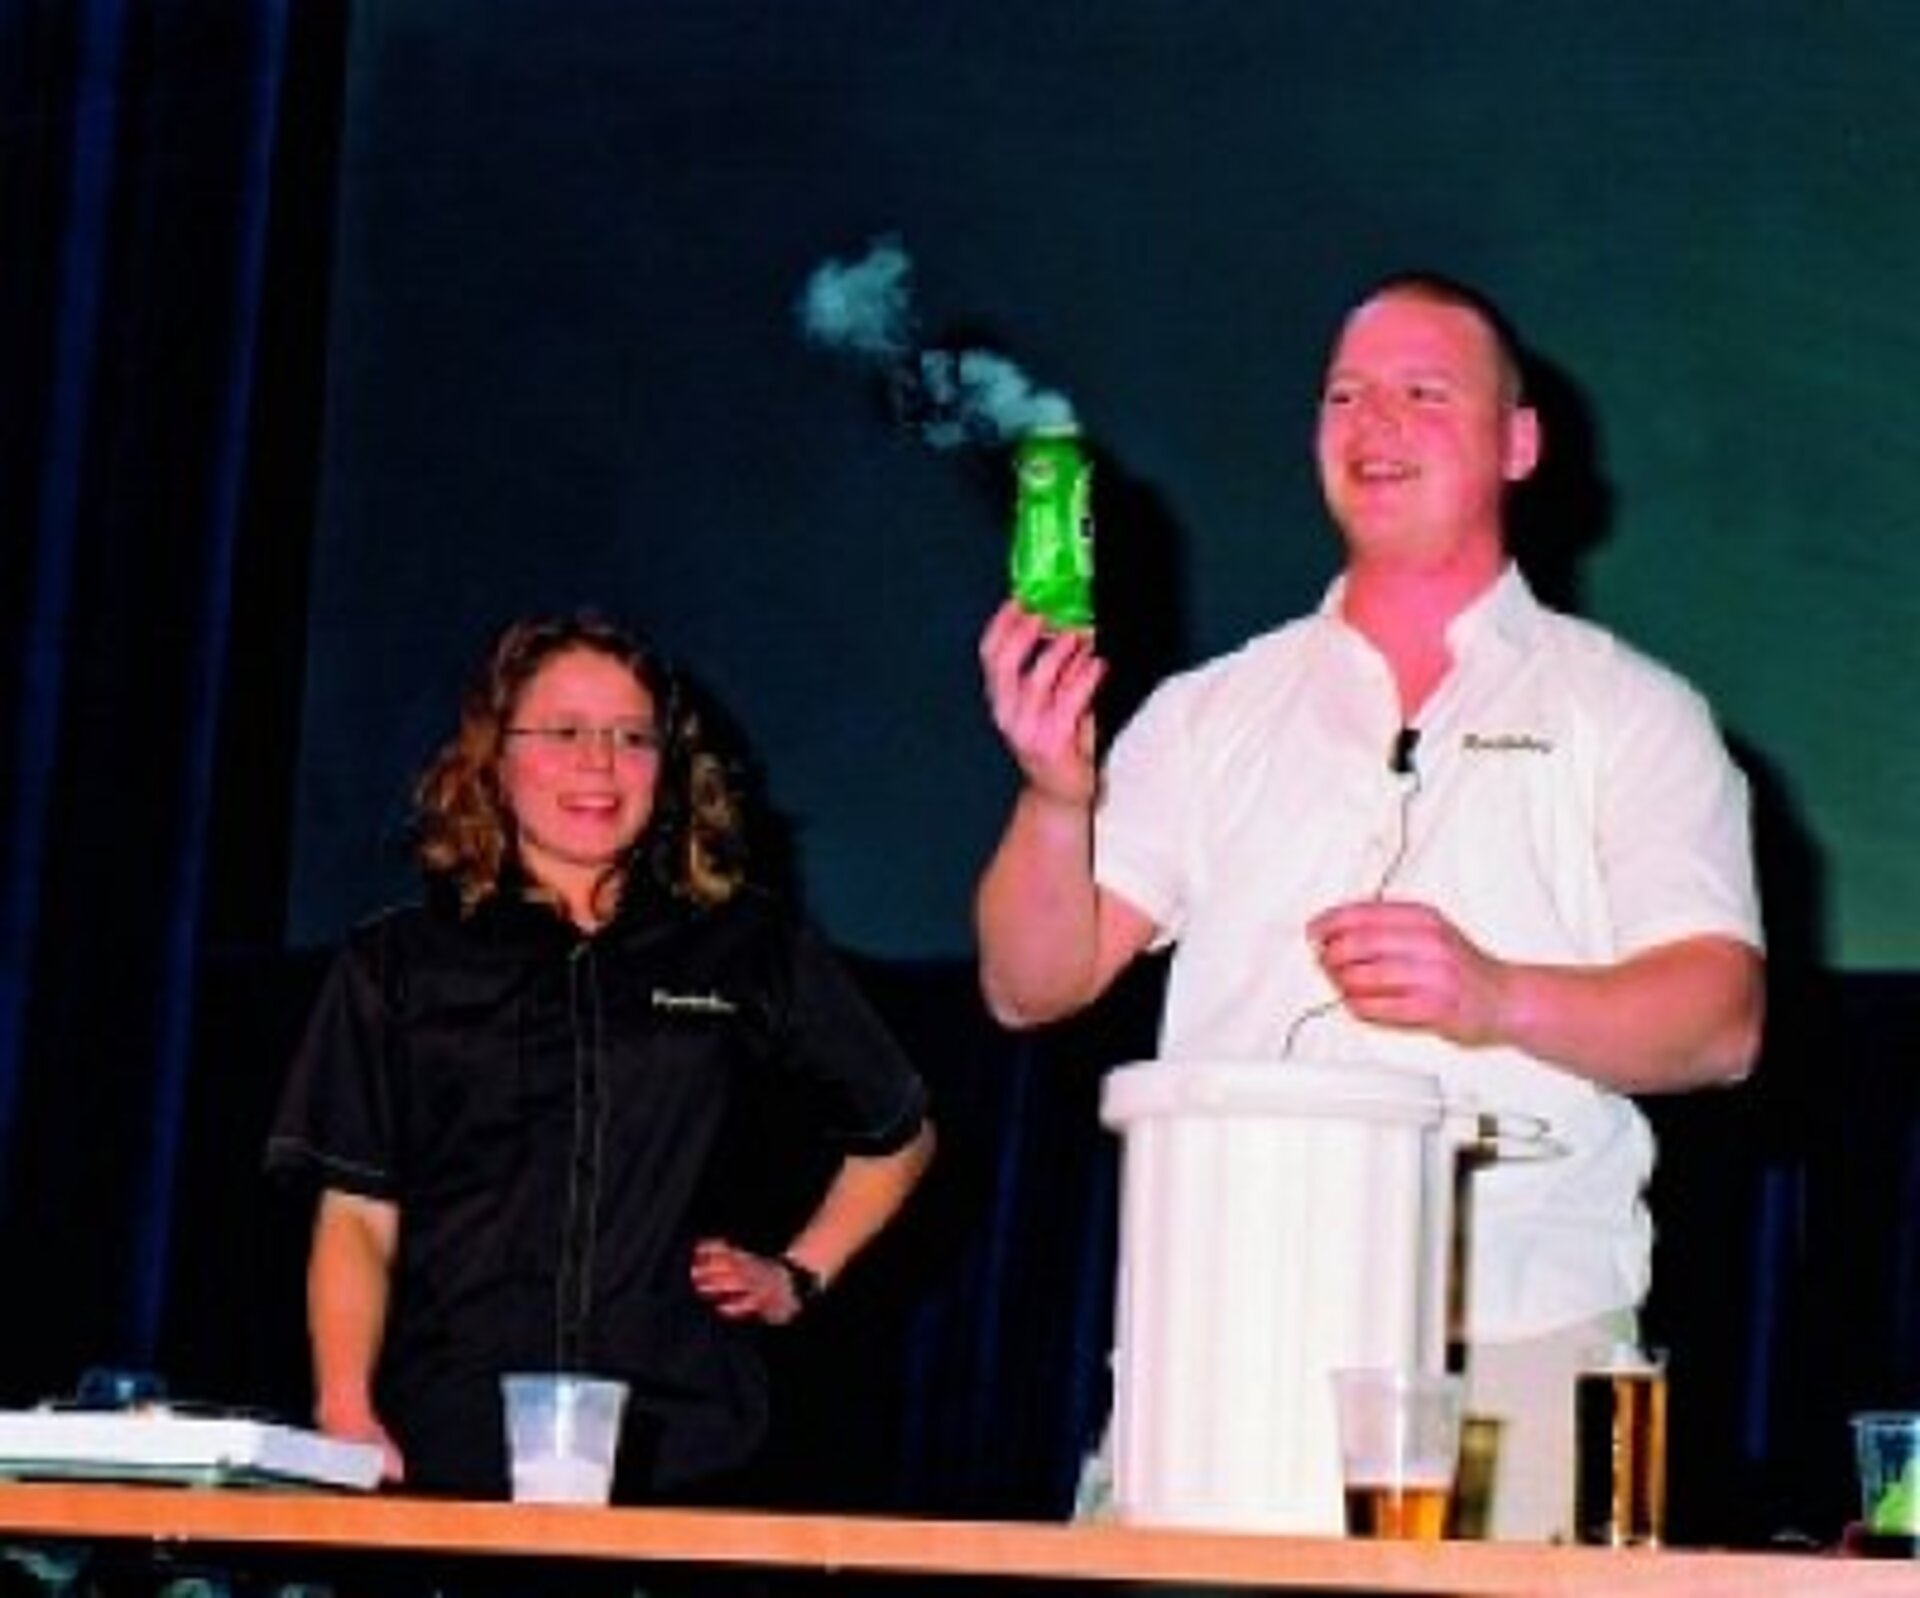 Natuurkunde proeven tijdens het festival 'Physics on Stage 2002'